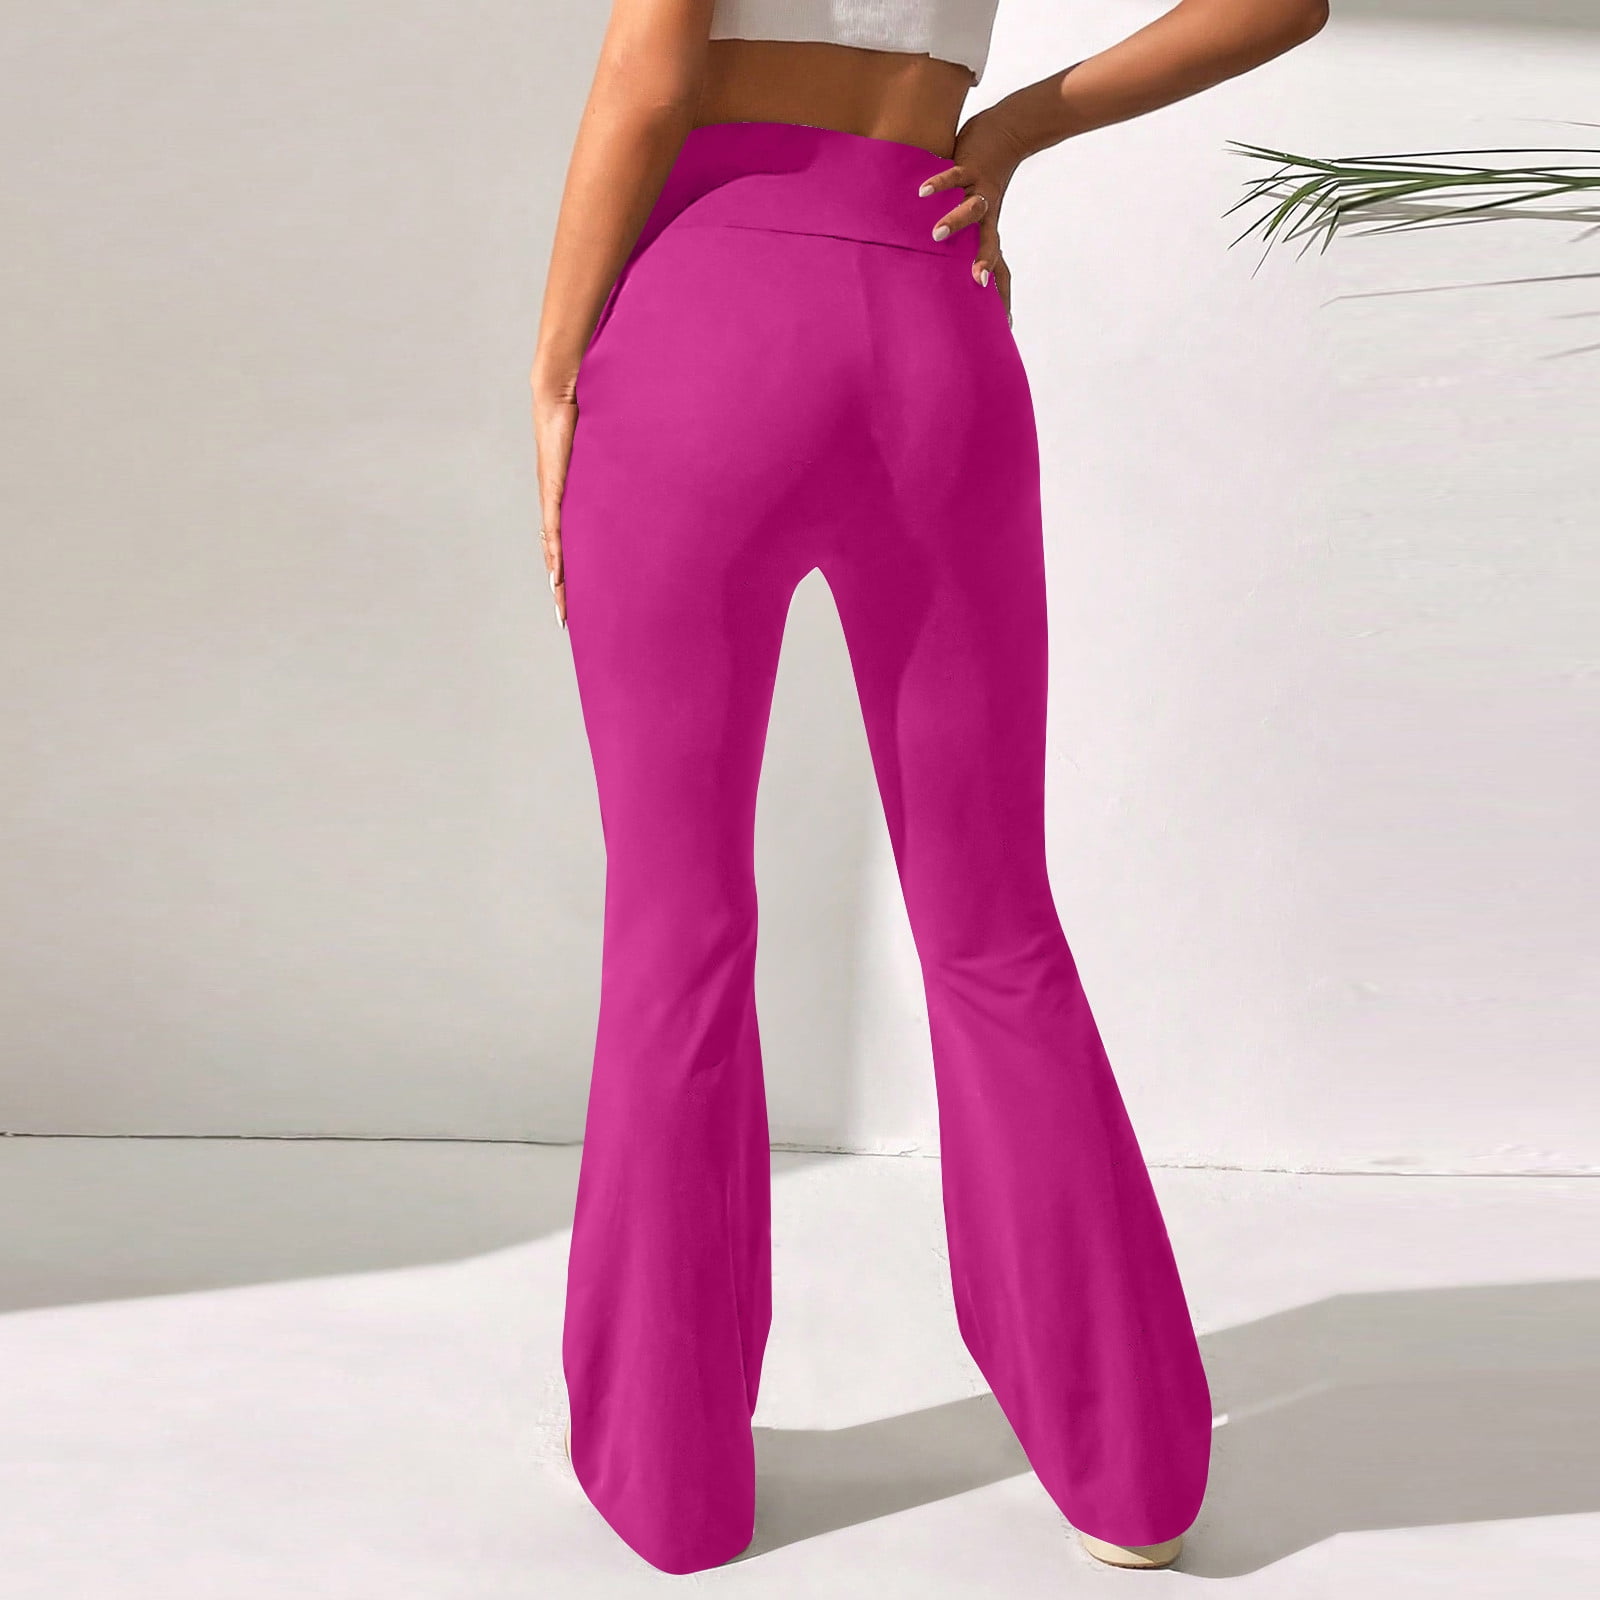 Mlqidk Womens Bootcut Yoga Pants Leggings High Waisted Tummy Control Yoga Flare  Pants Hot Pink XL 